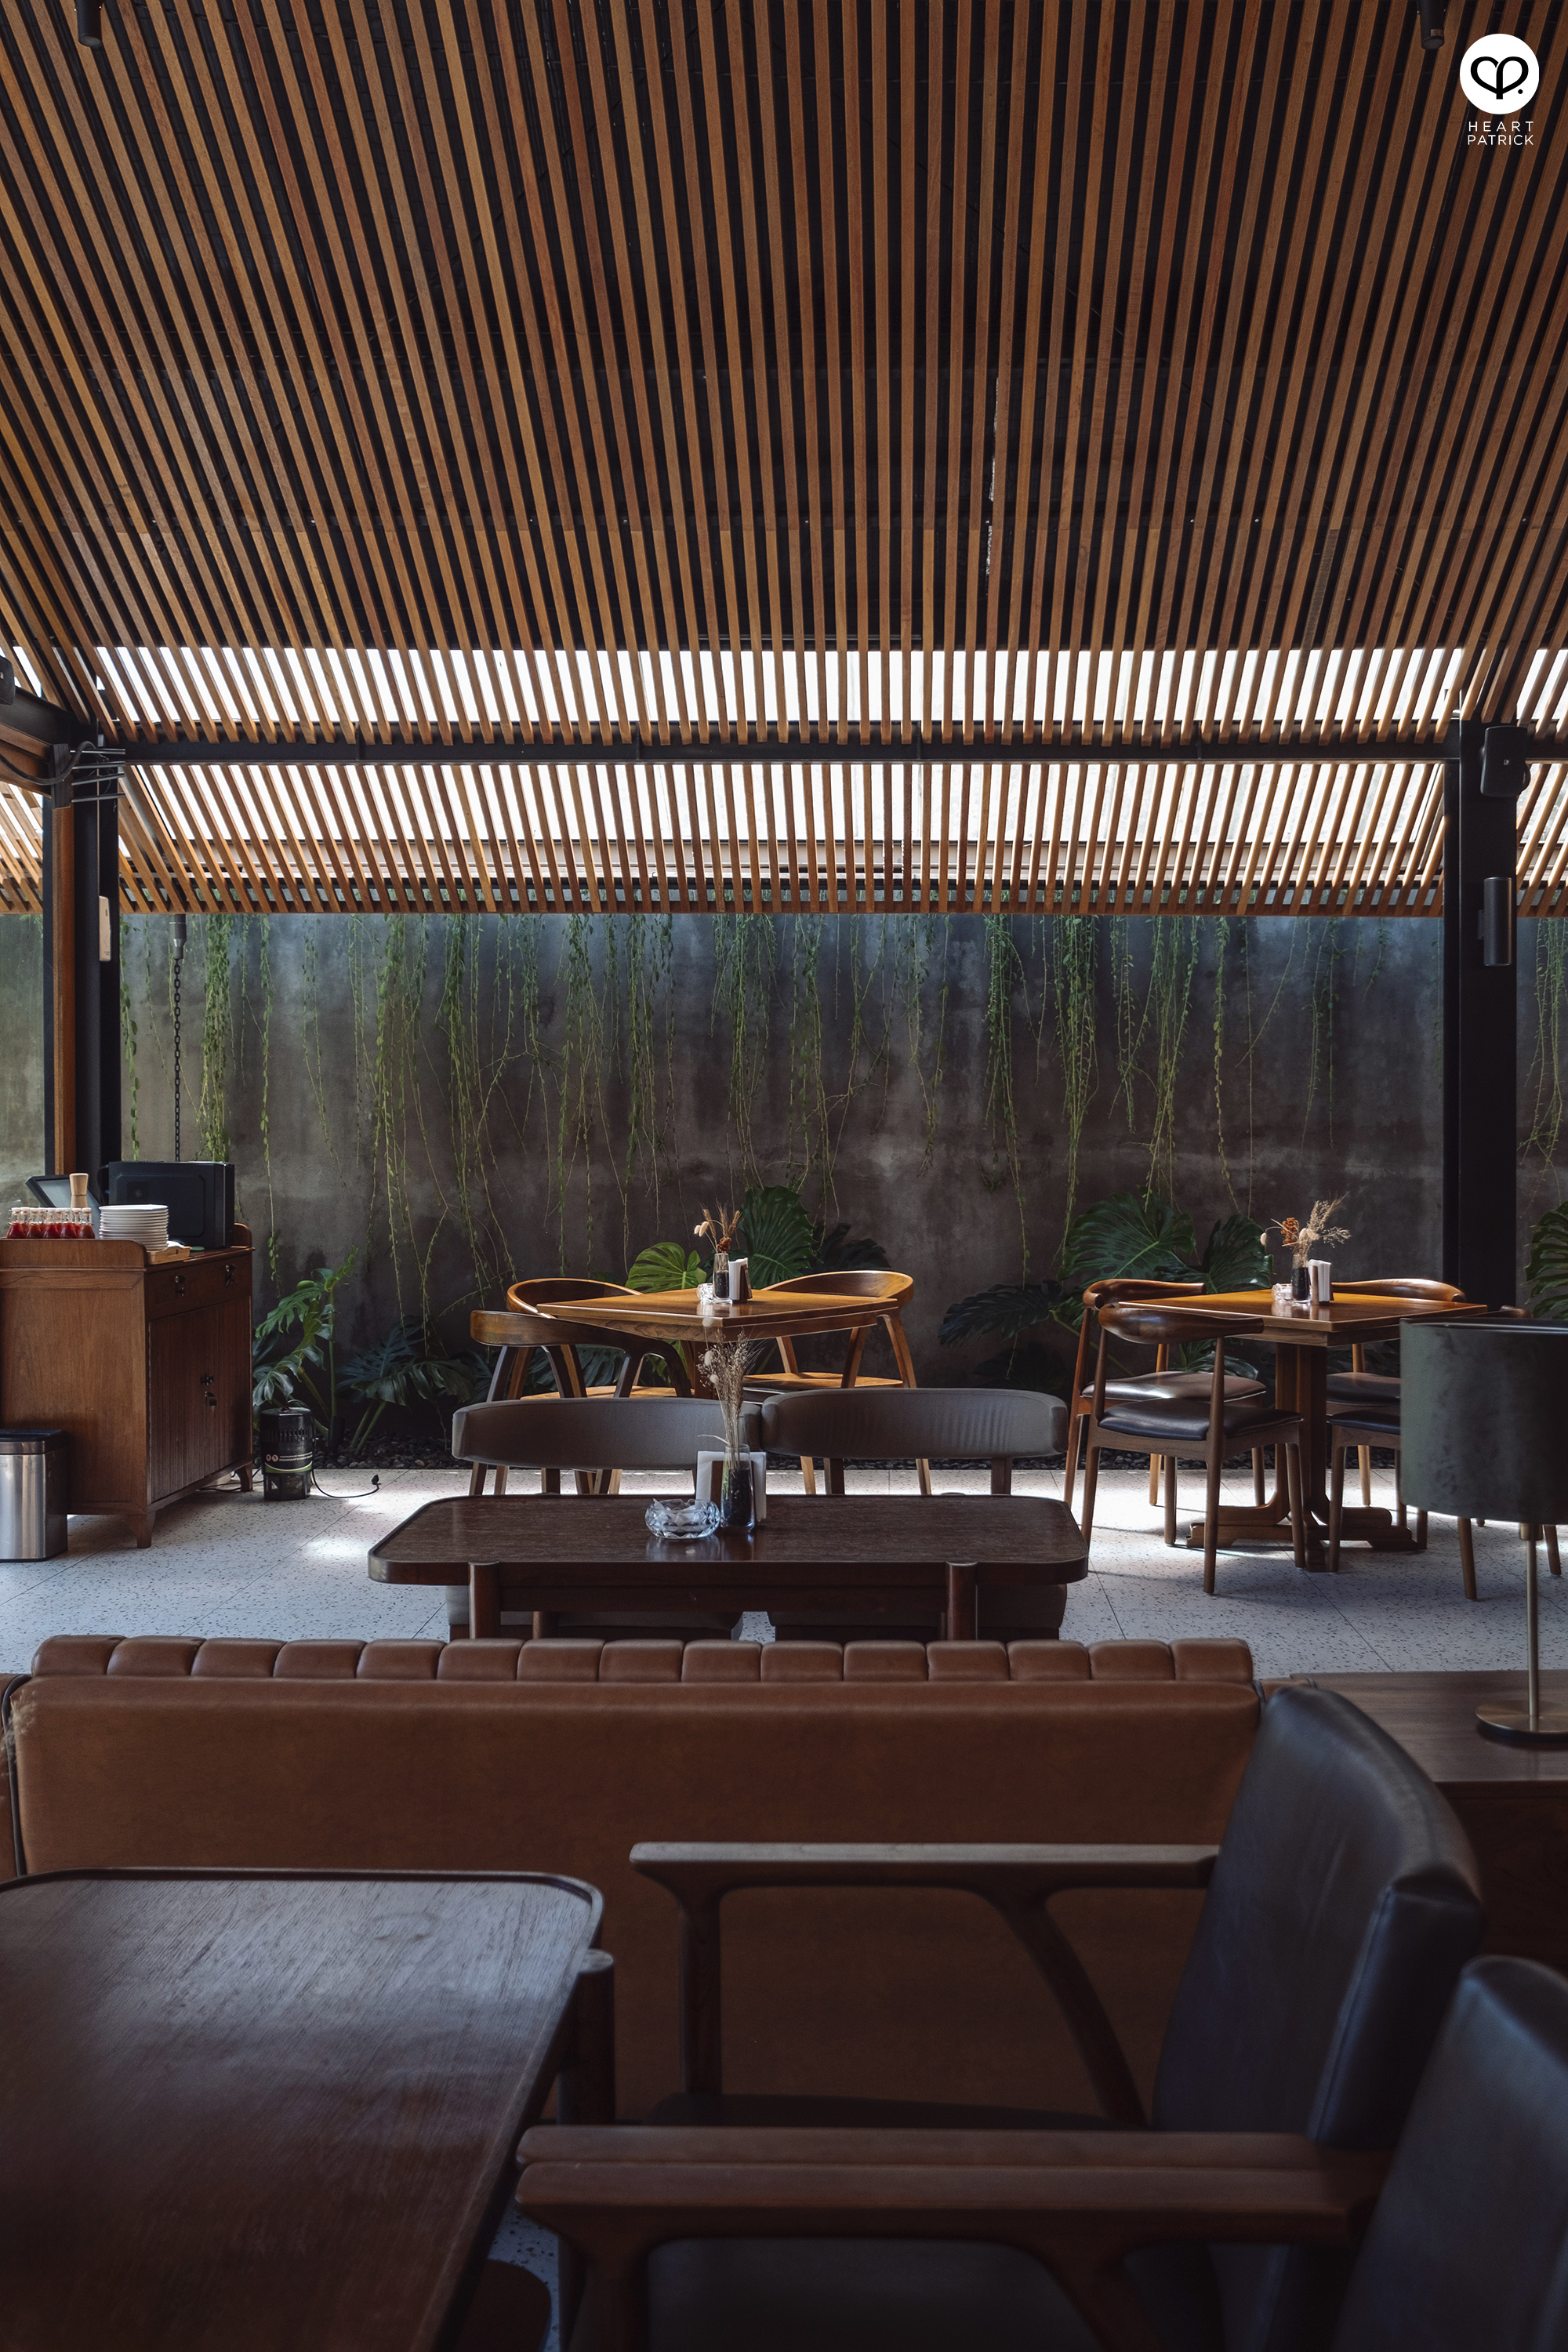 heartpatrick architecture interior cafe photography fella bandung indonesia